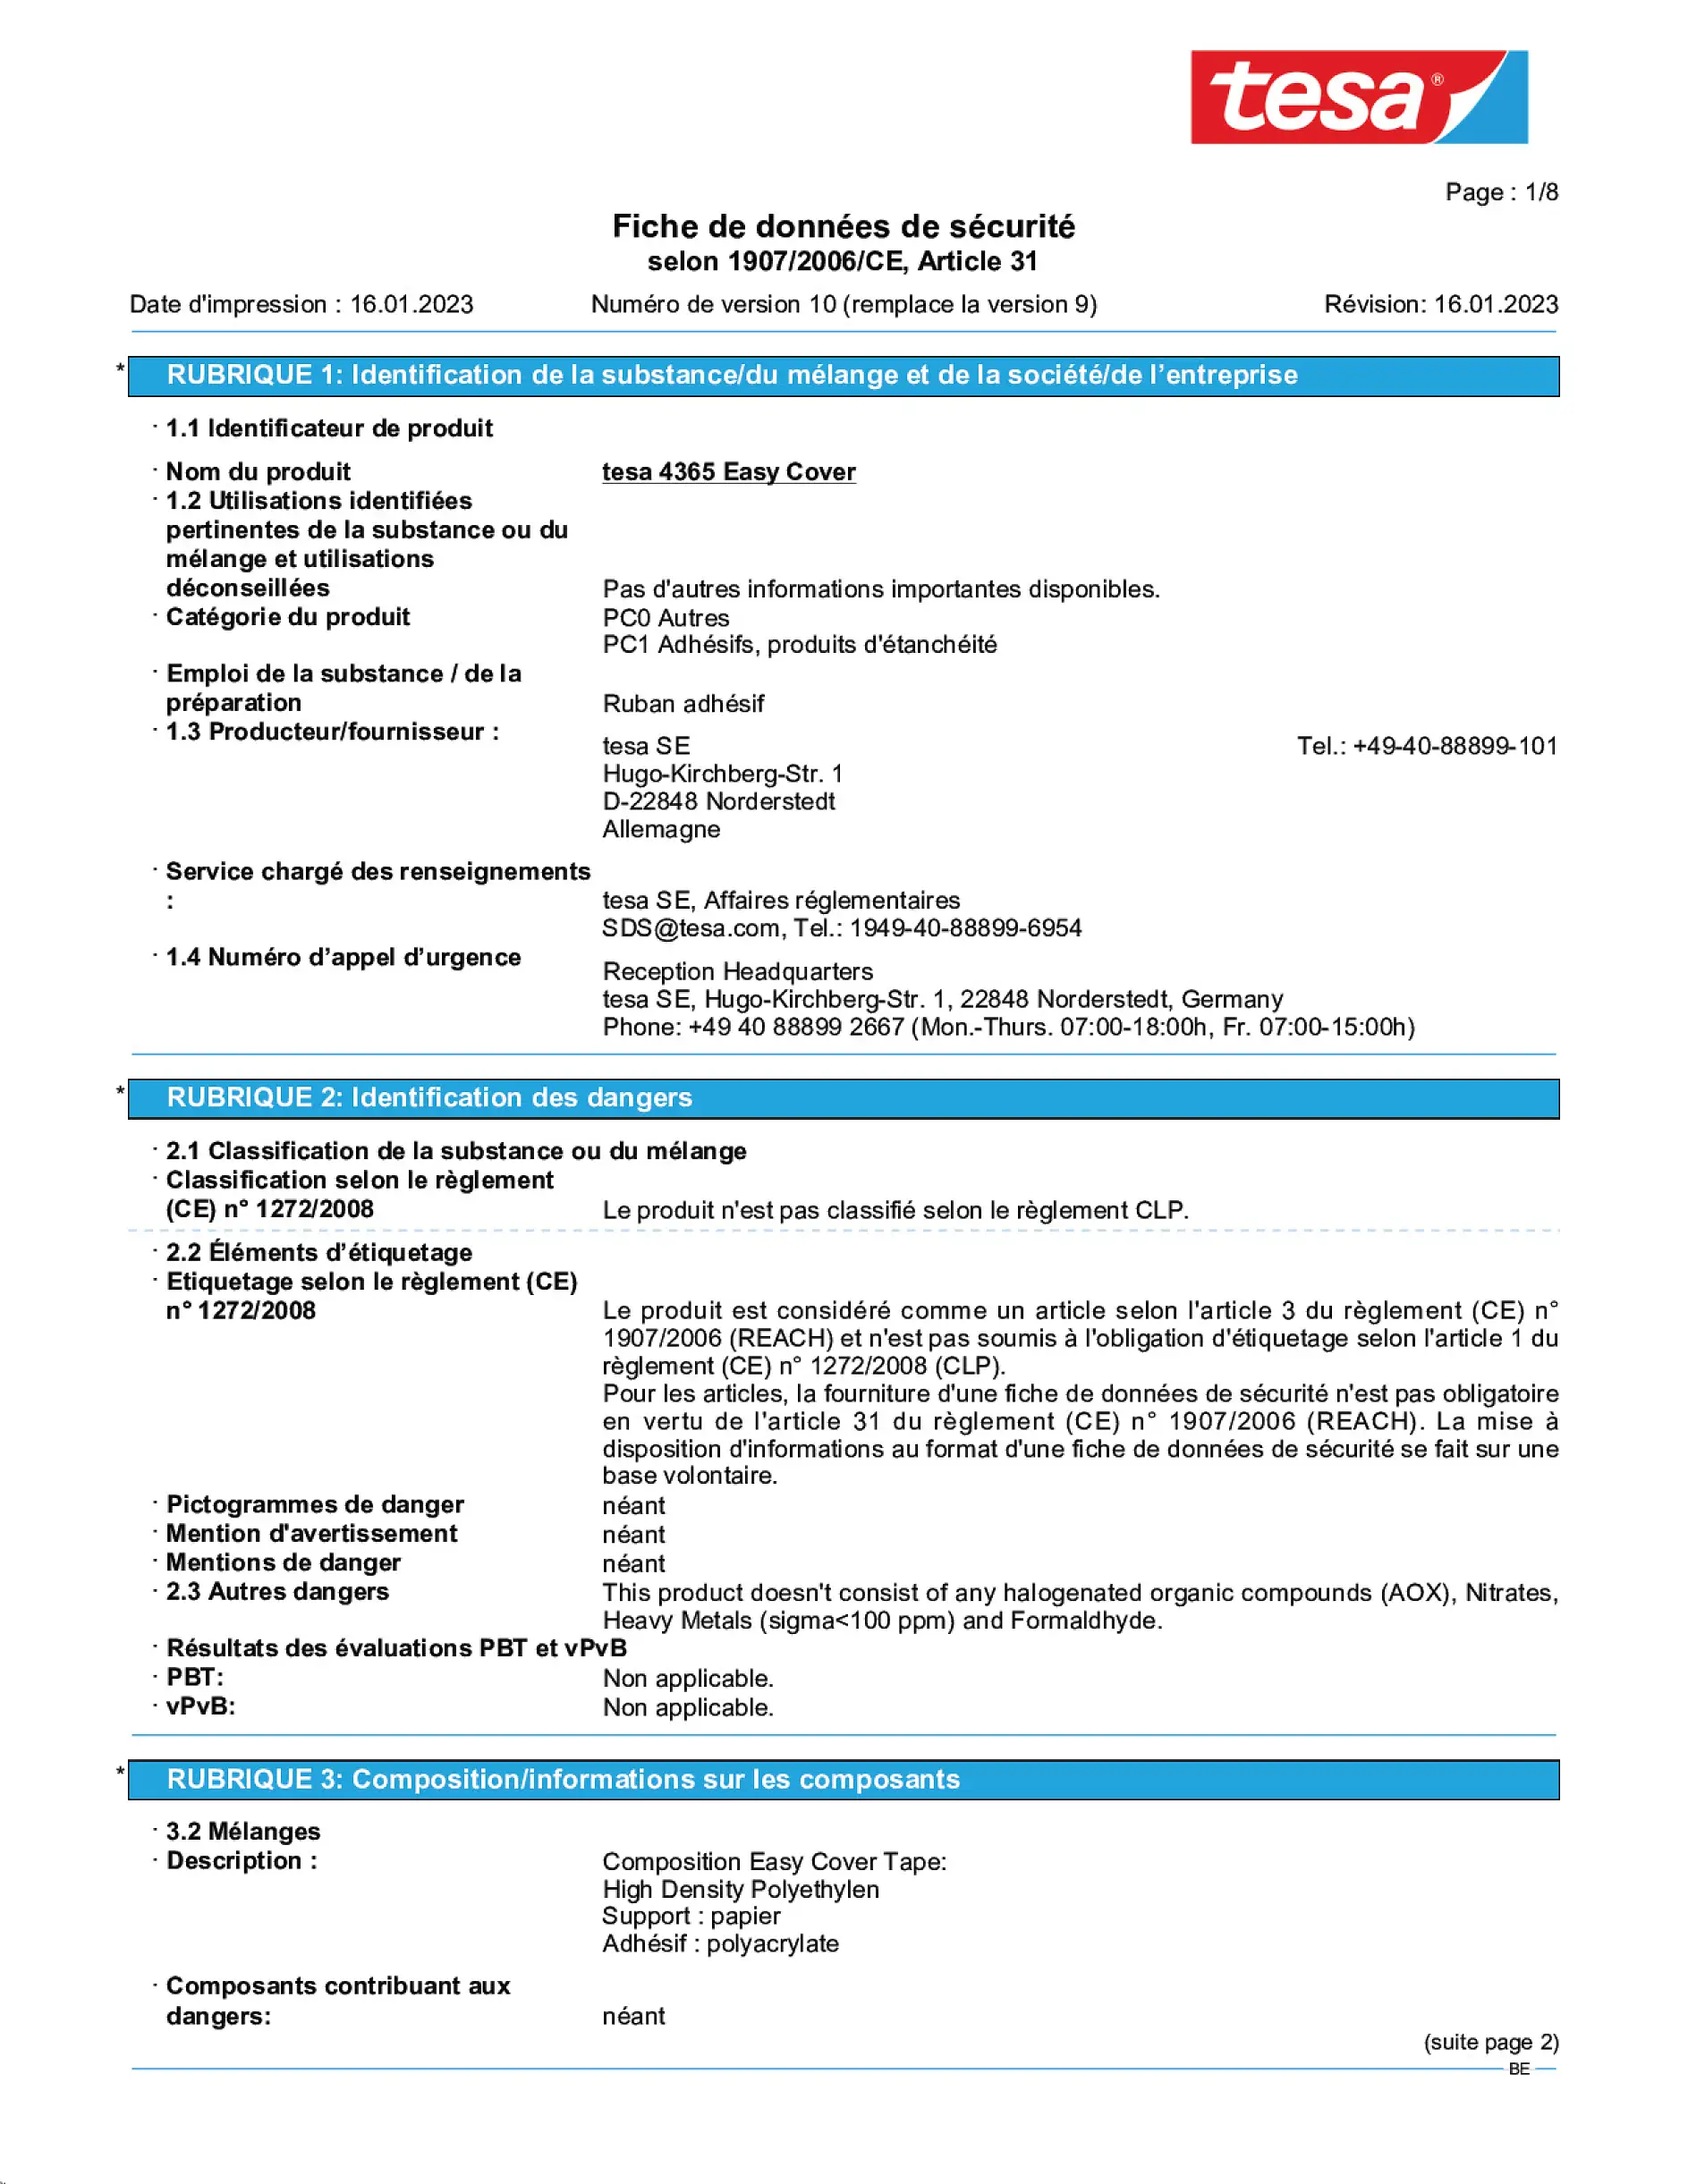 Safety data sheet_tesa® Professional 04365_nl-BE_v10